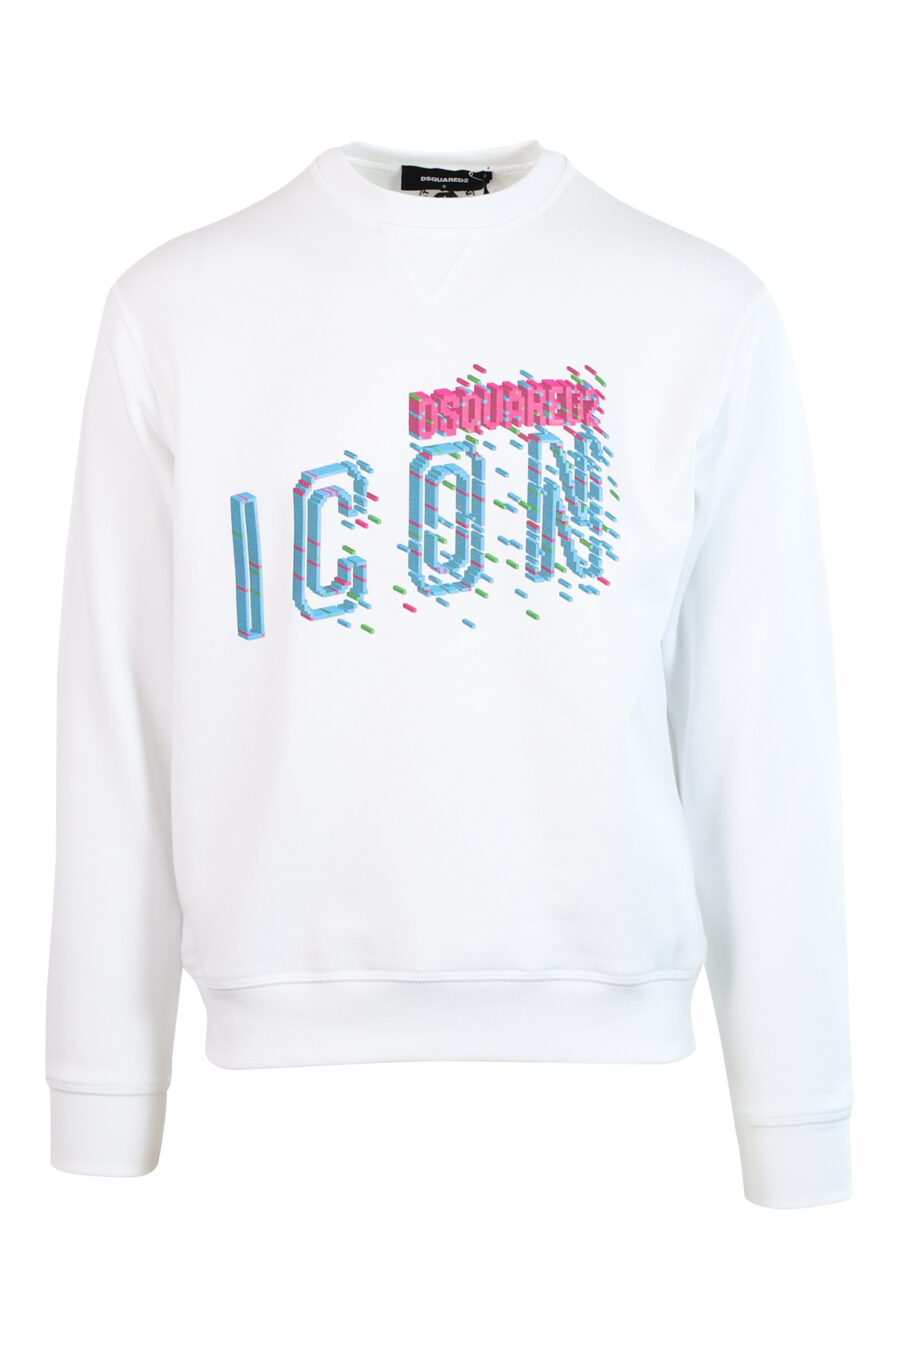 White sweatshirt with "icon pixeled" maxilogo in turquoise and fuchsia - 8052134982228